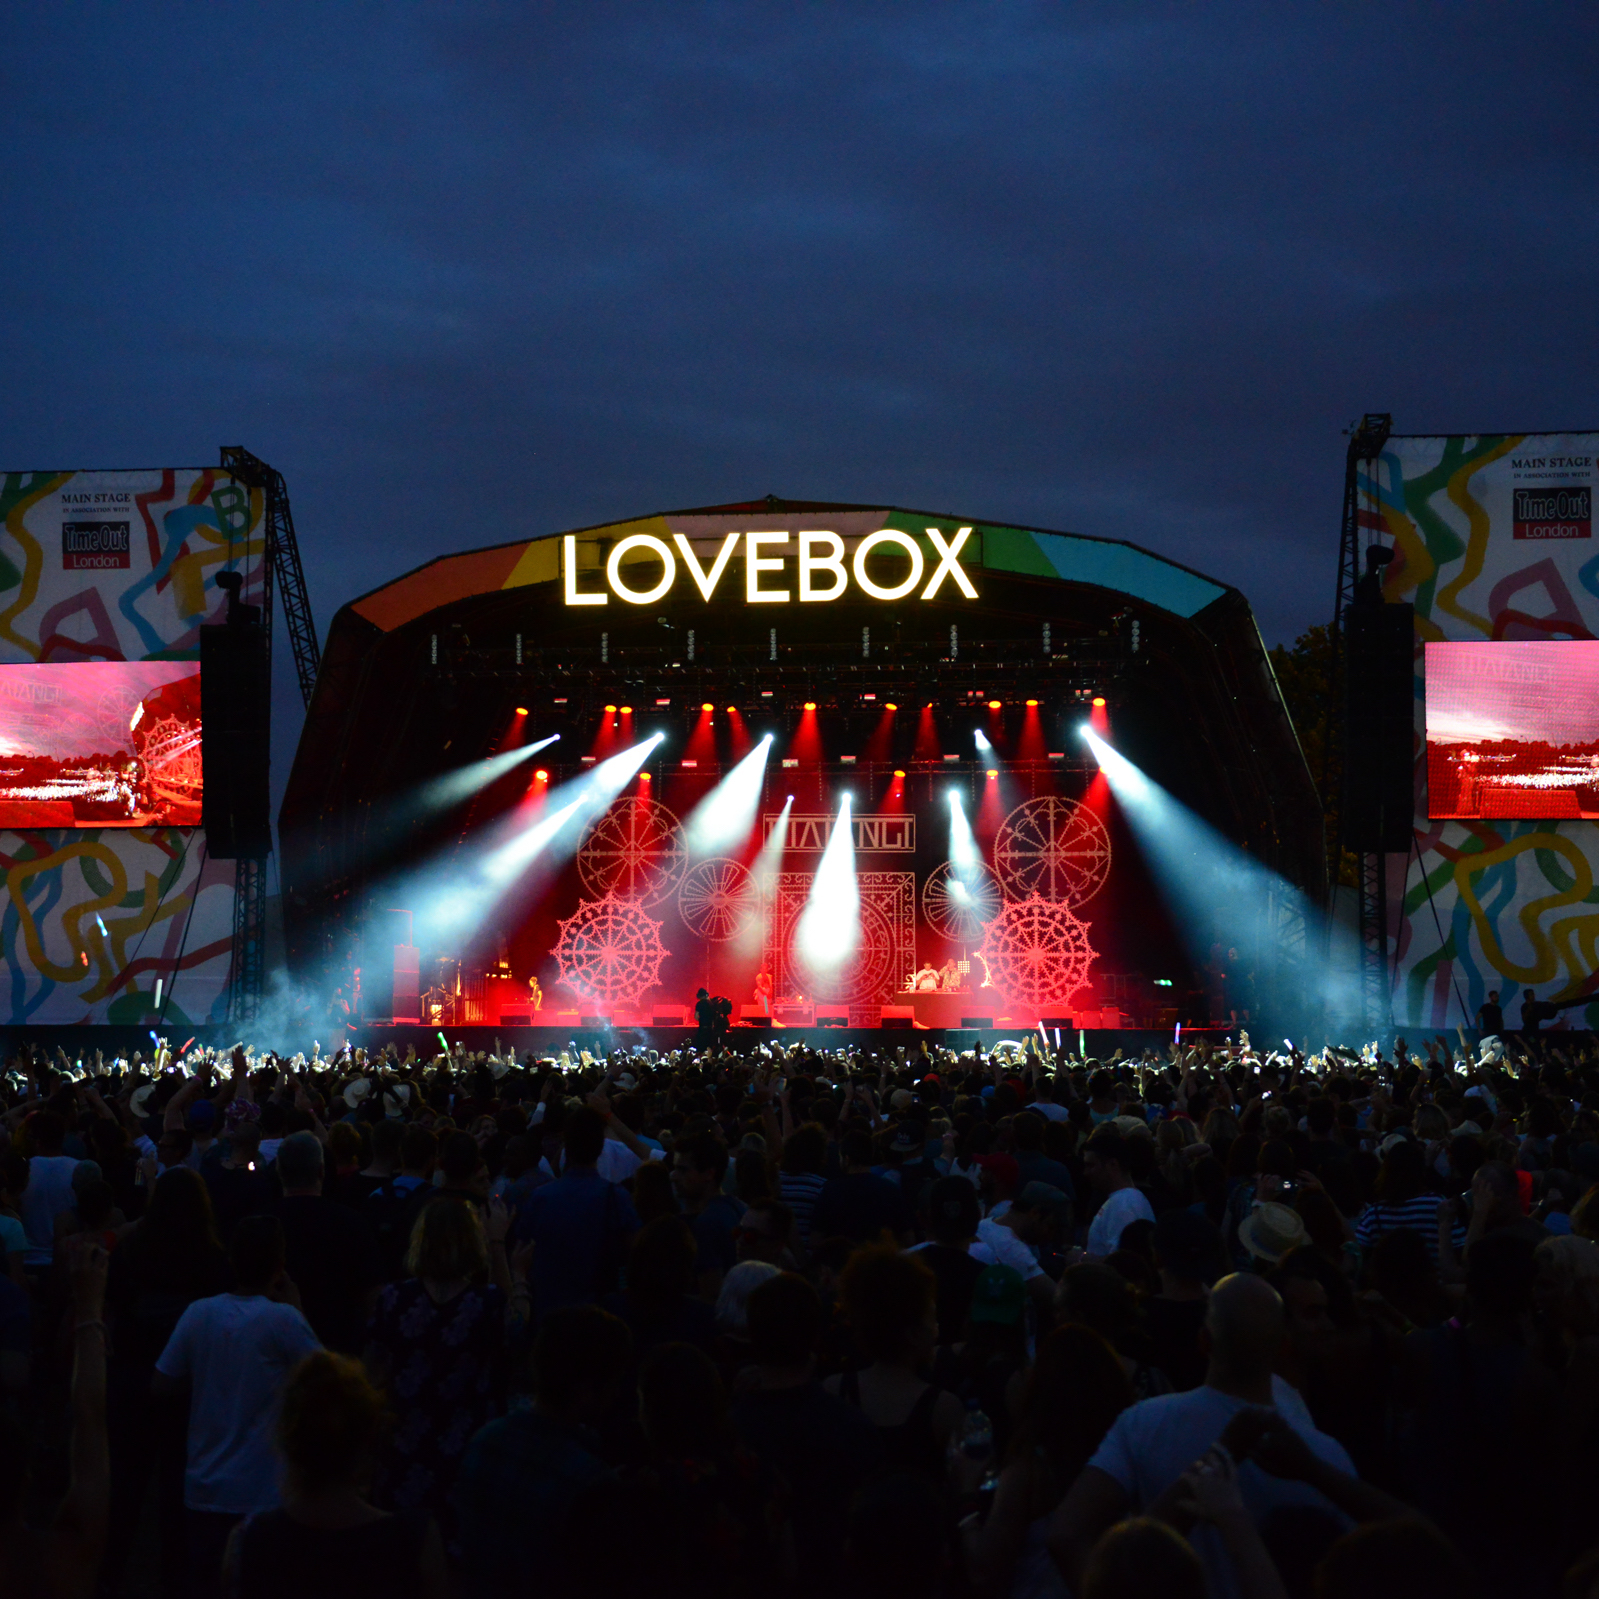 Lovebox Festival Tickets and Hospitality